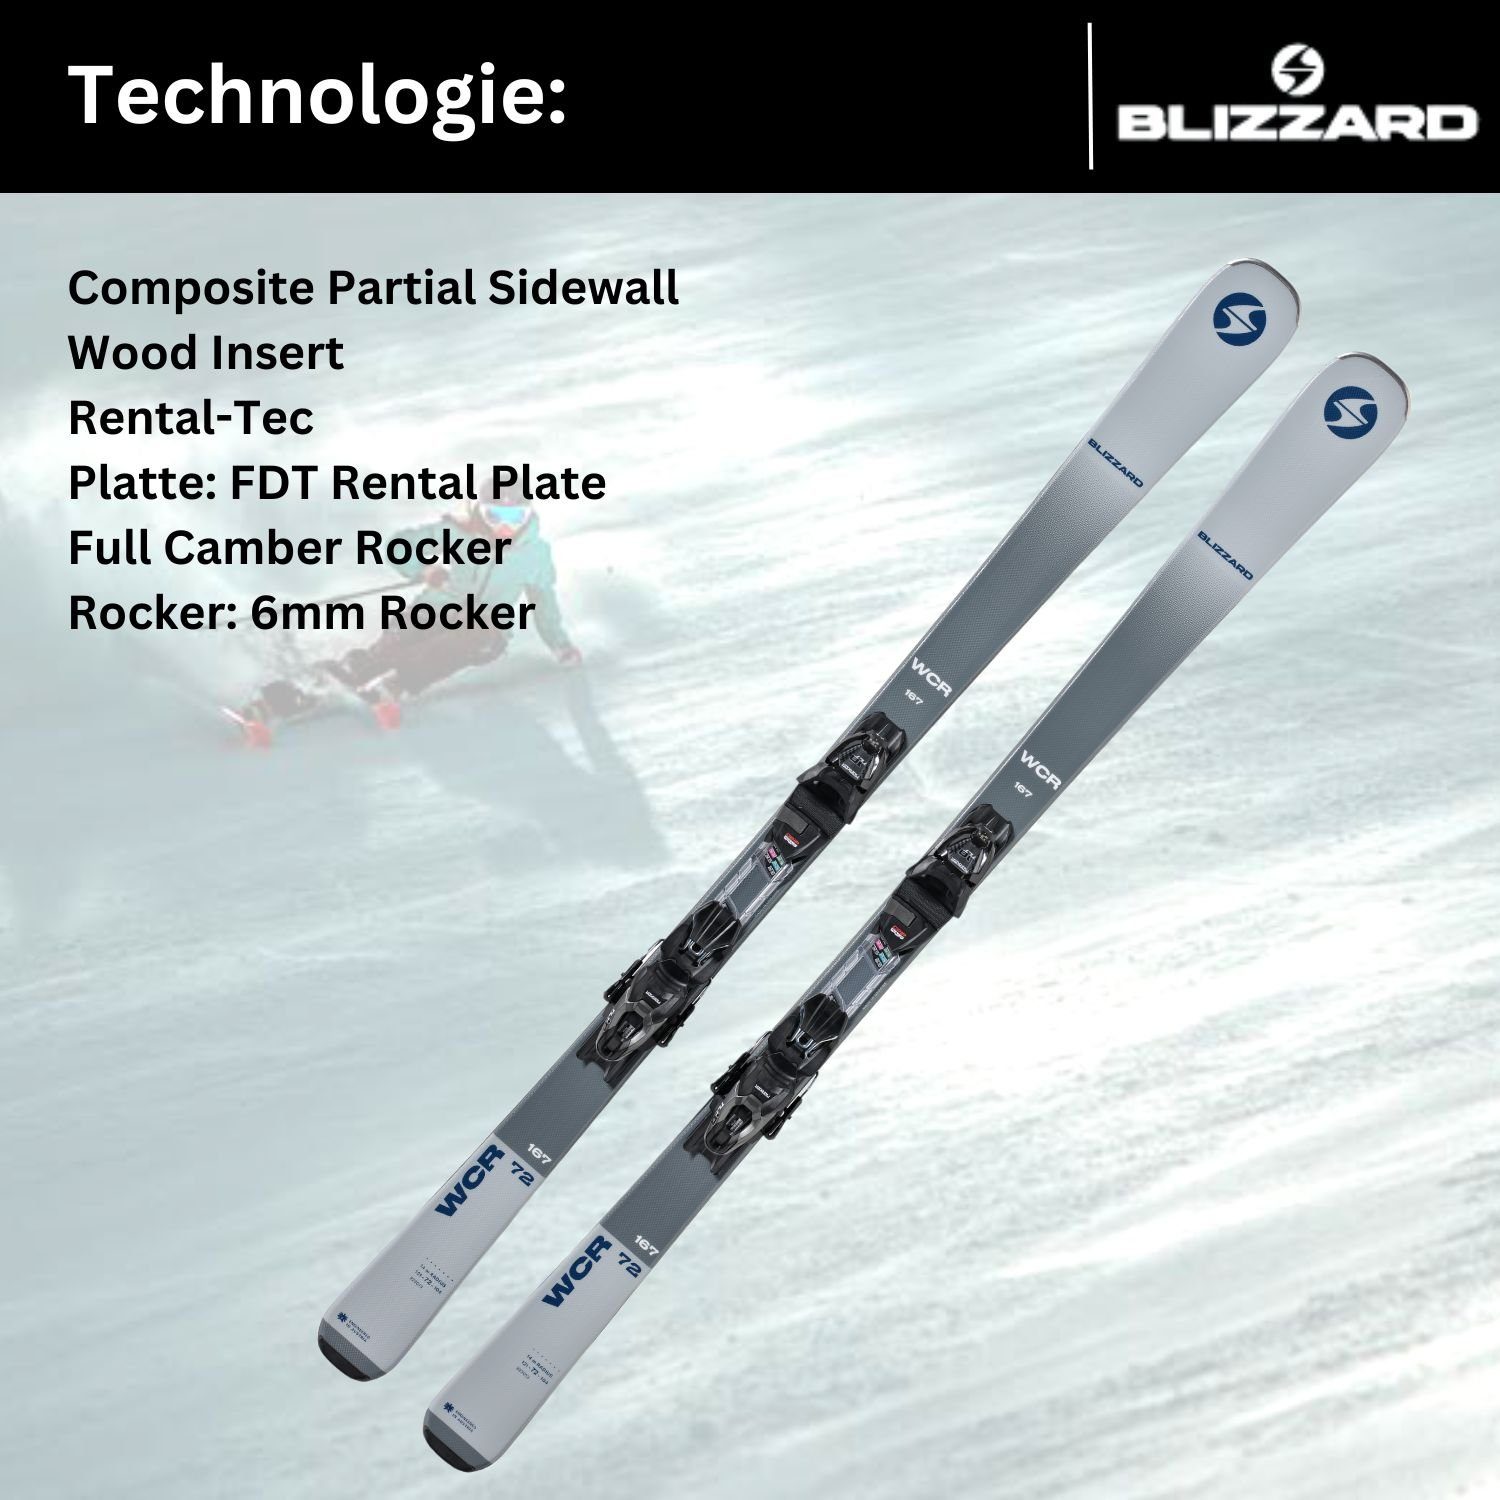 Z3-10 Bindung Ski, grau/blau Blizzard Full Rocker 10 Camber WCR + TLT Ski BLIZZARD Marker